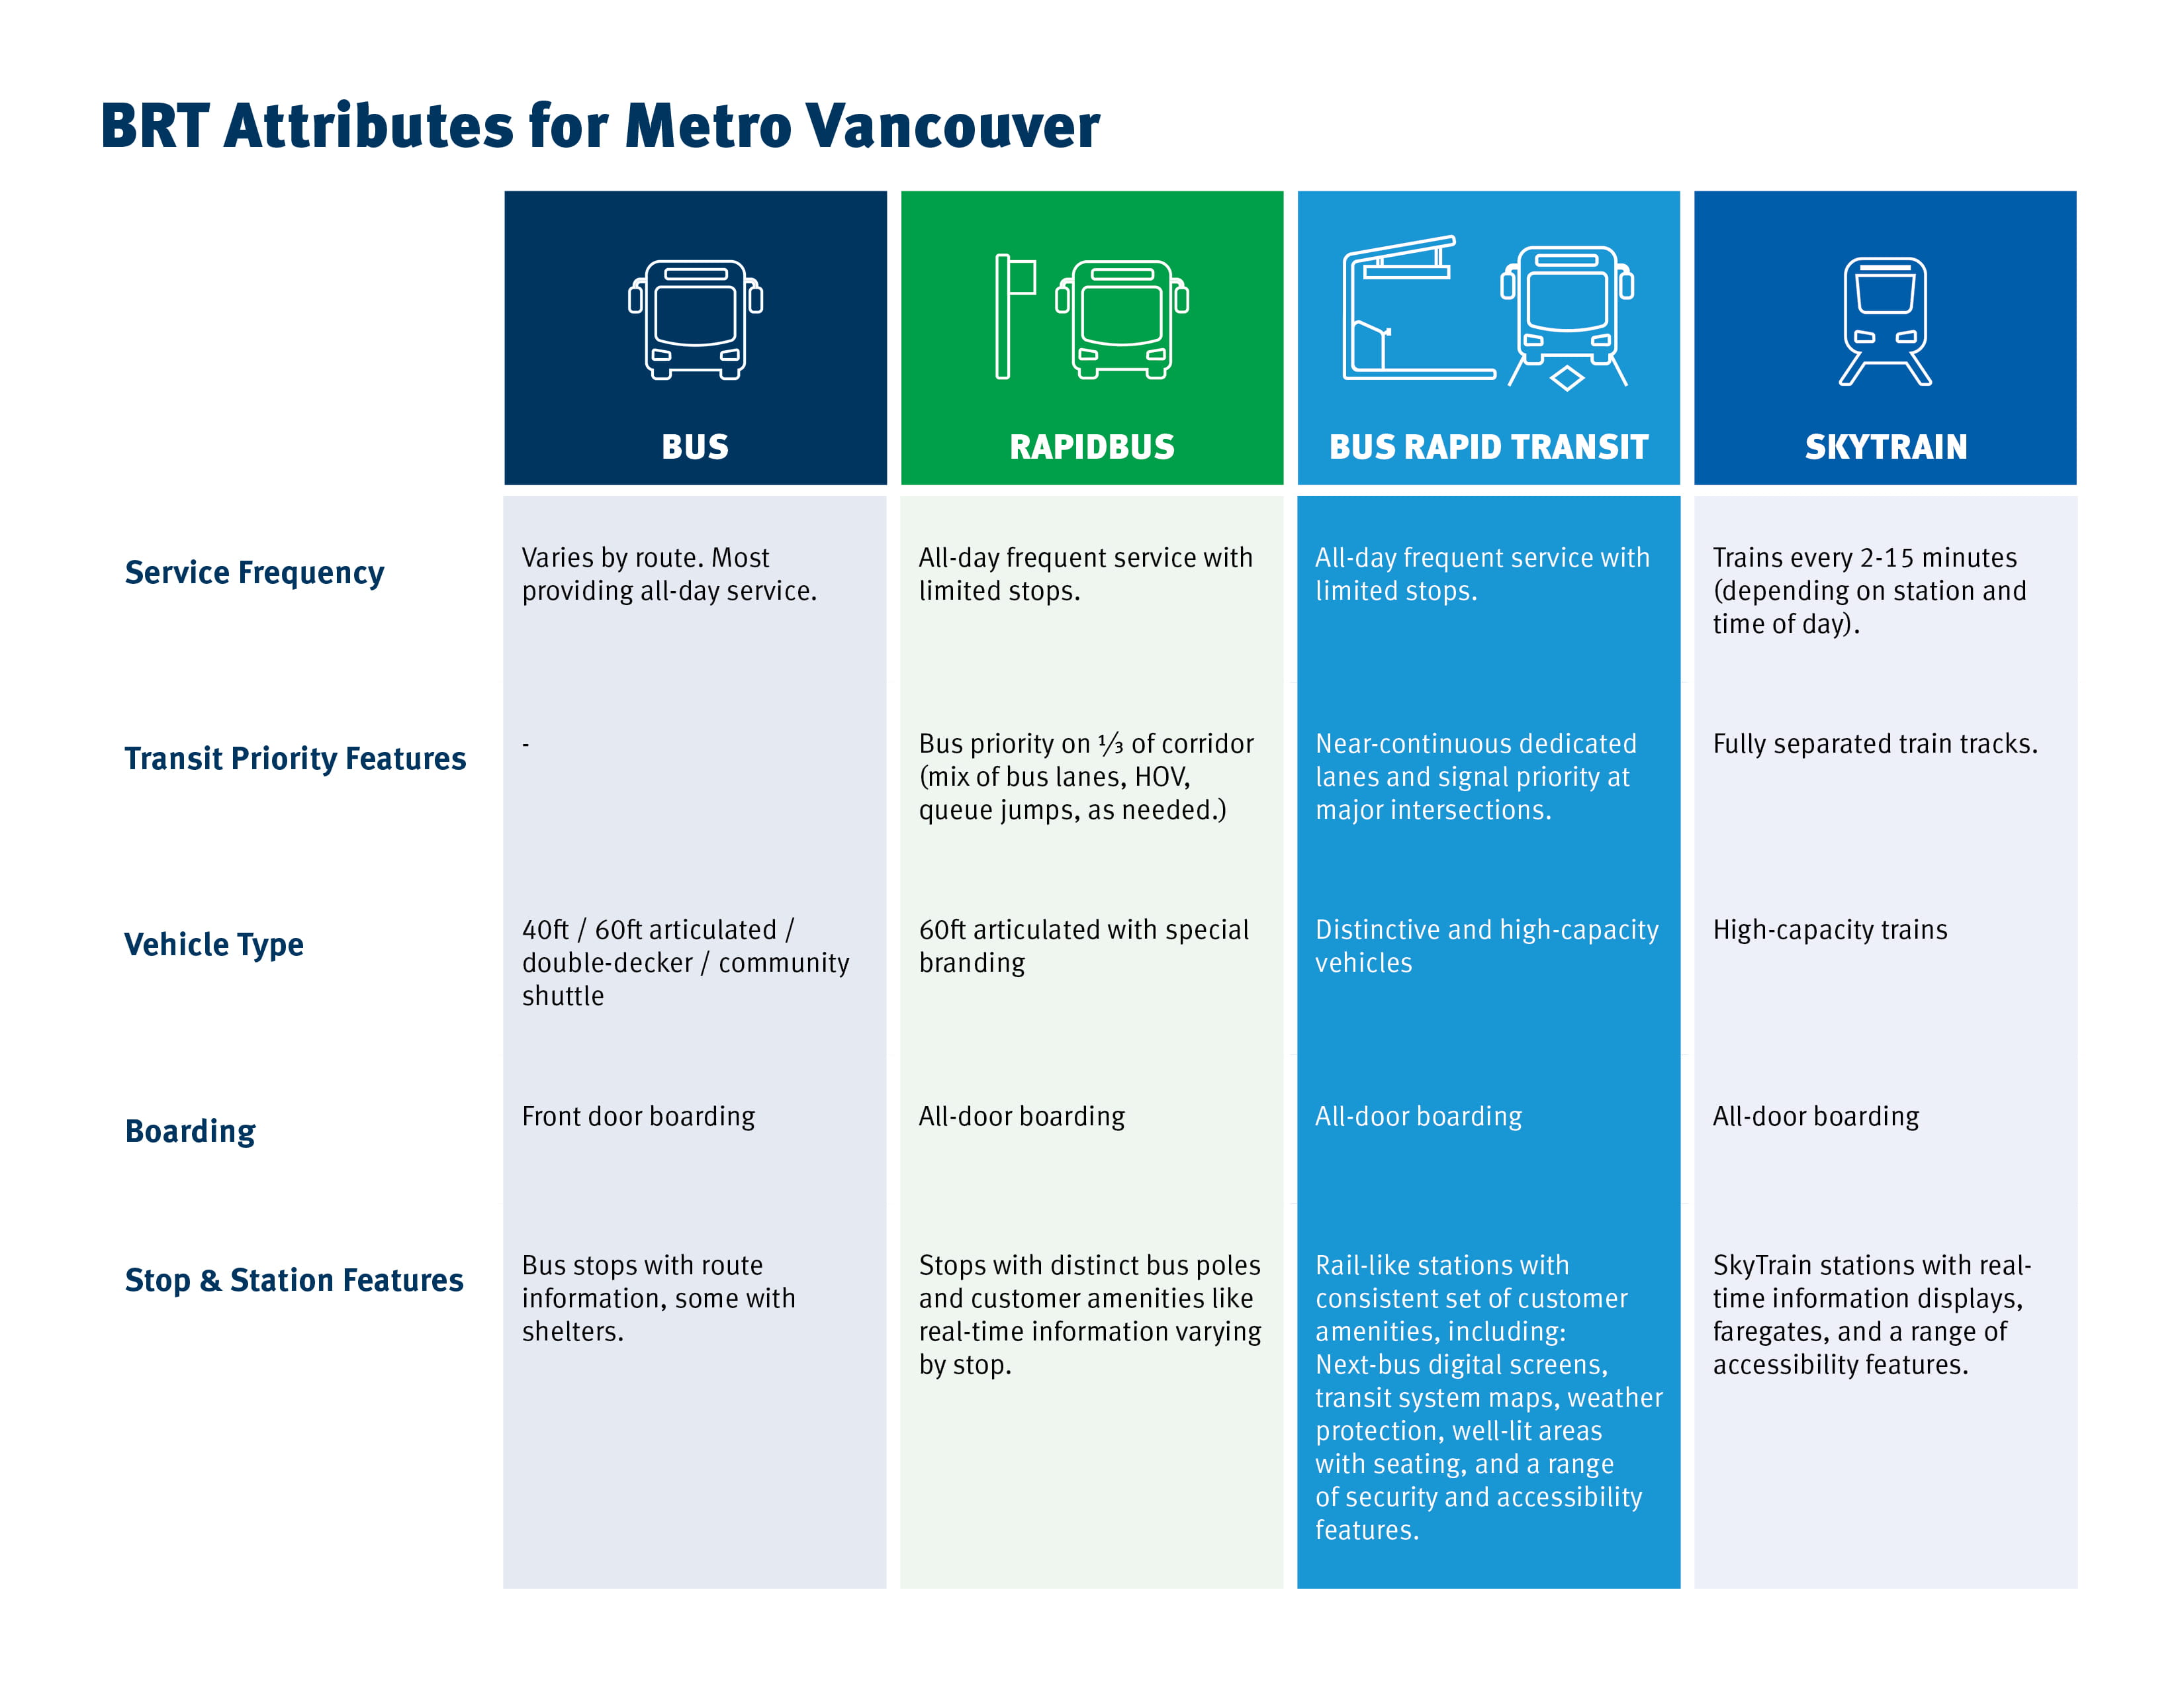 BRT attributes table